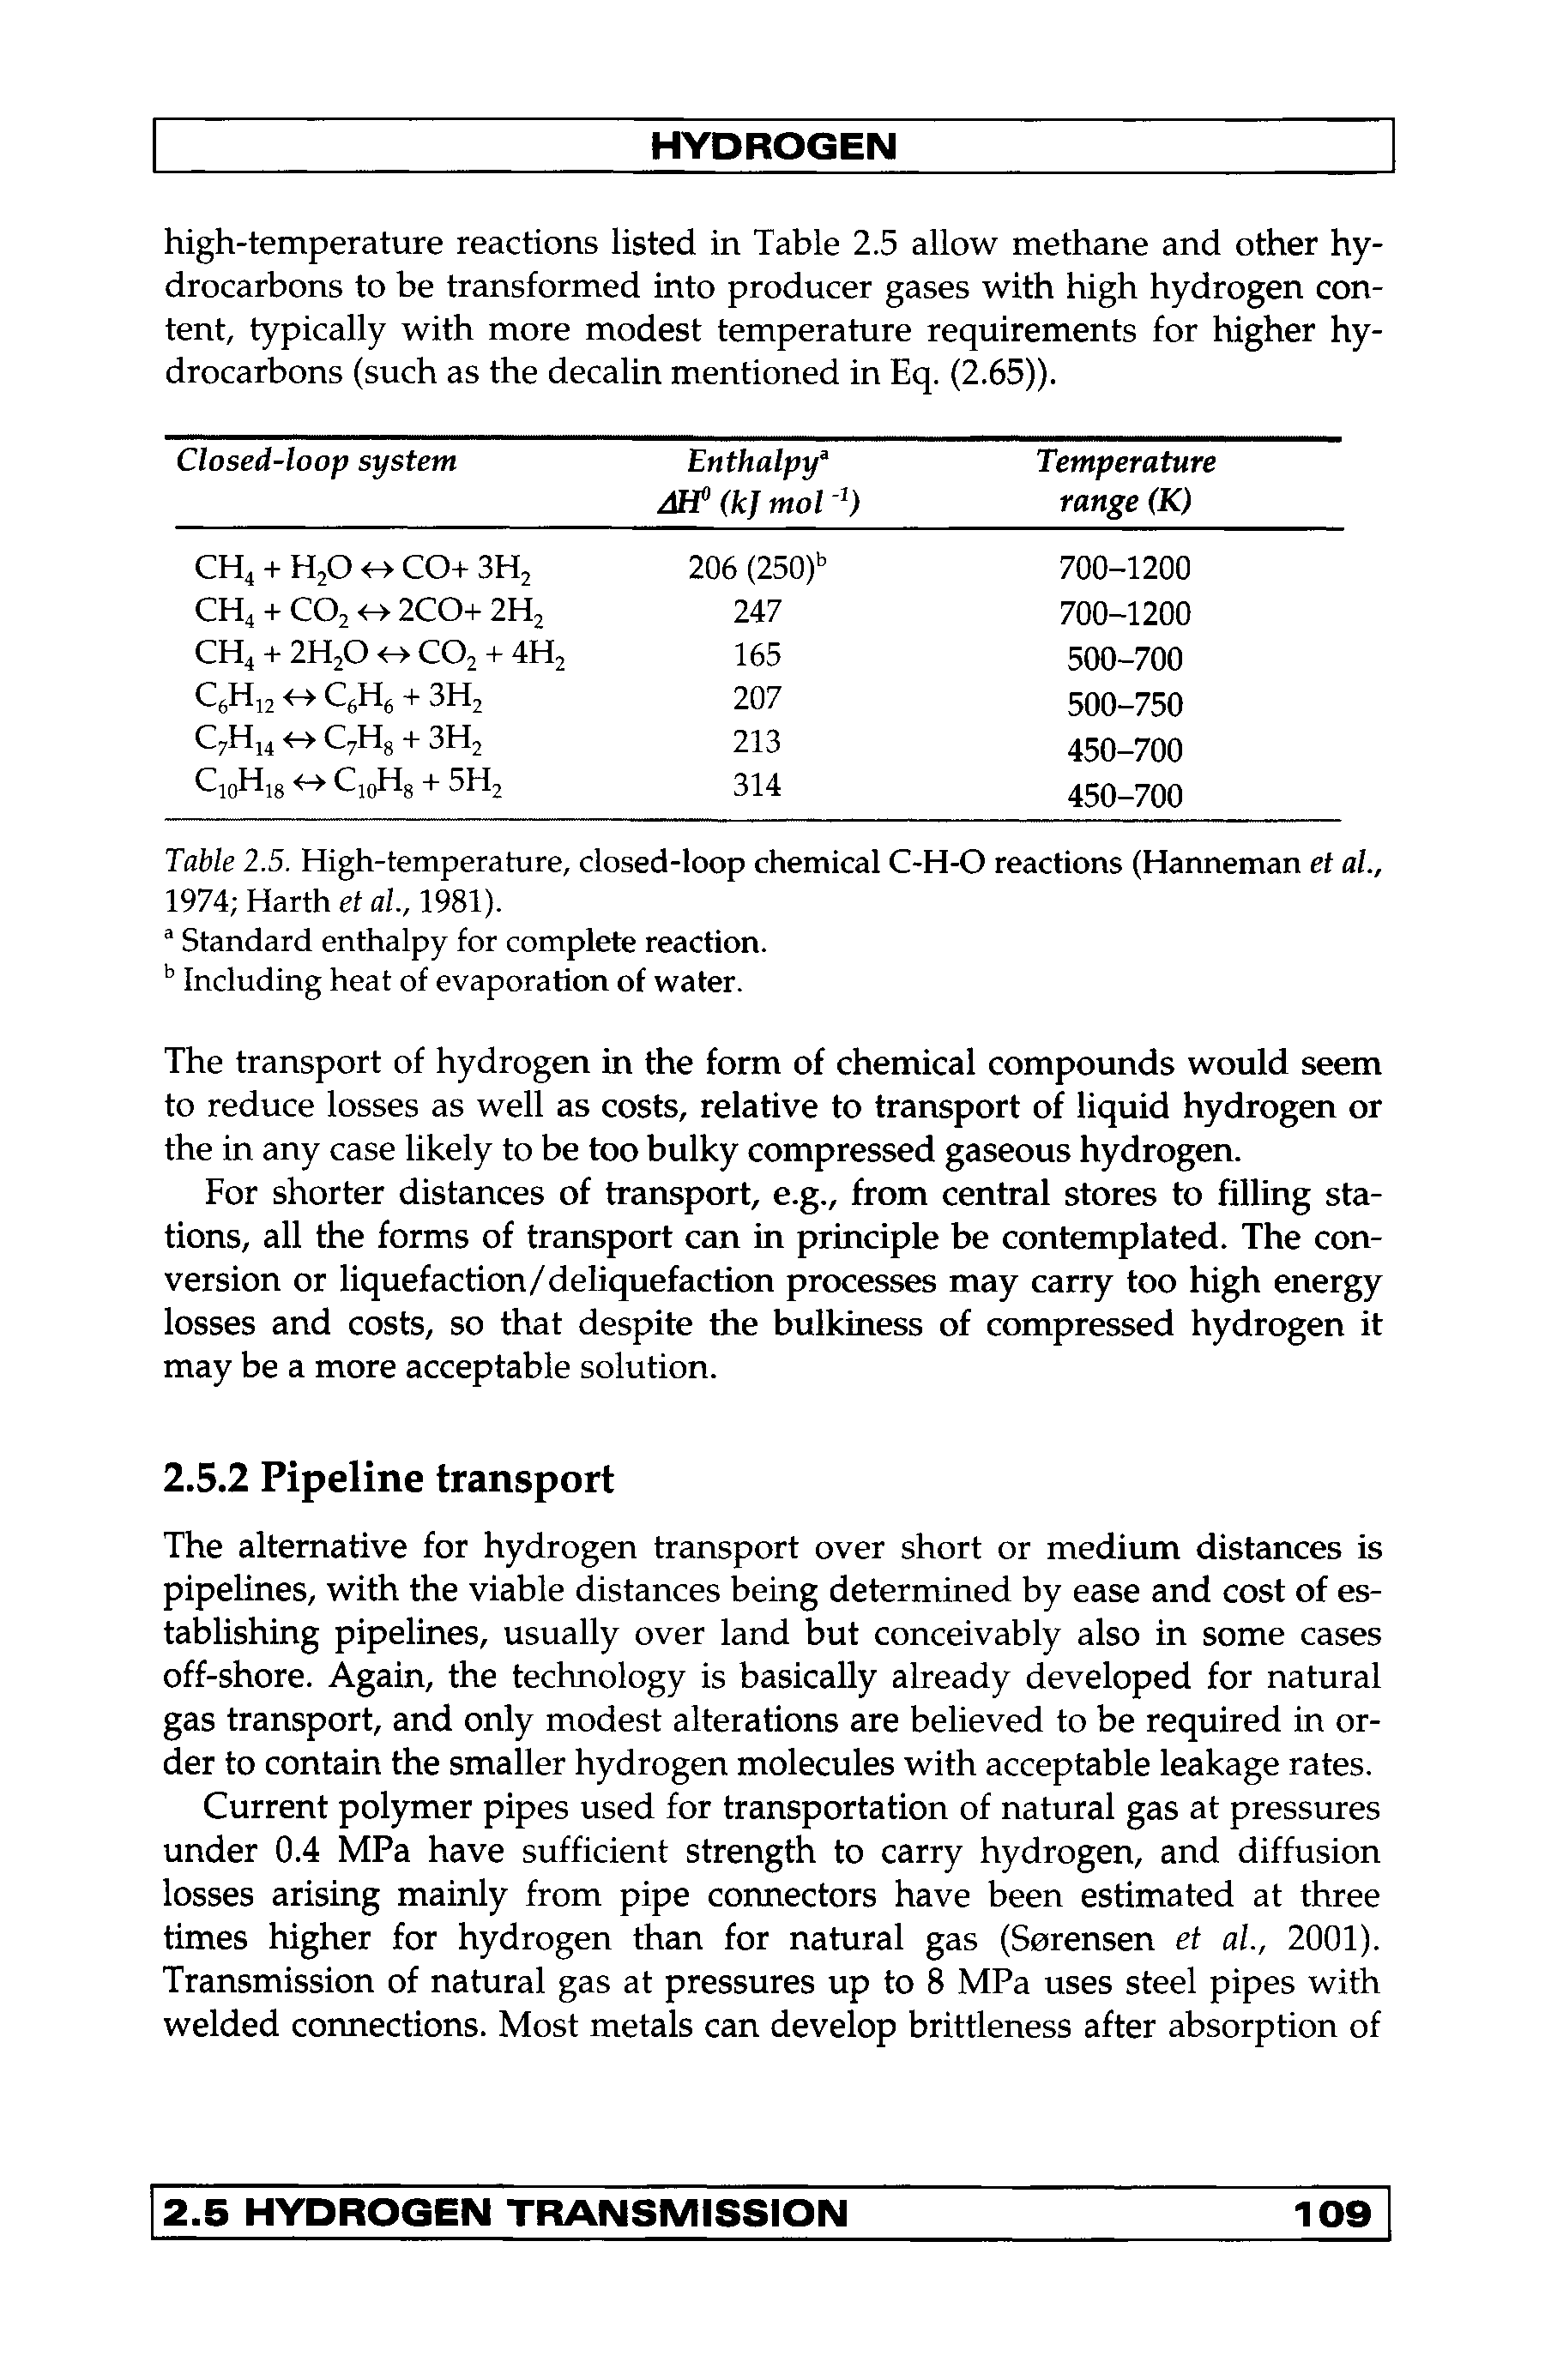 Table 2.5. High-temperature, closed-loop chemical C-H-O reactions (Hanneman el ah, 1974 Harth et al, 1981).